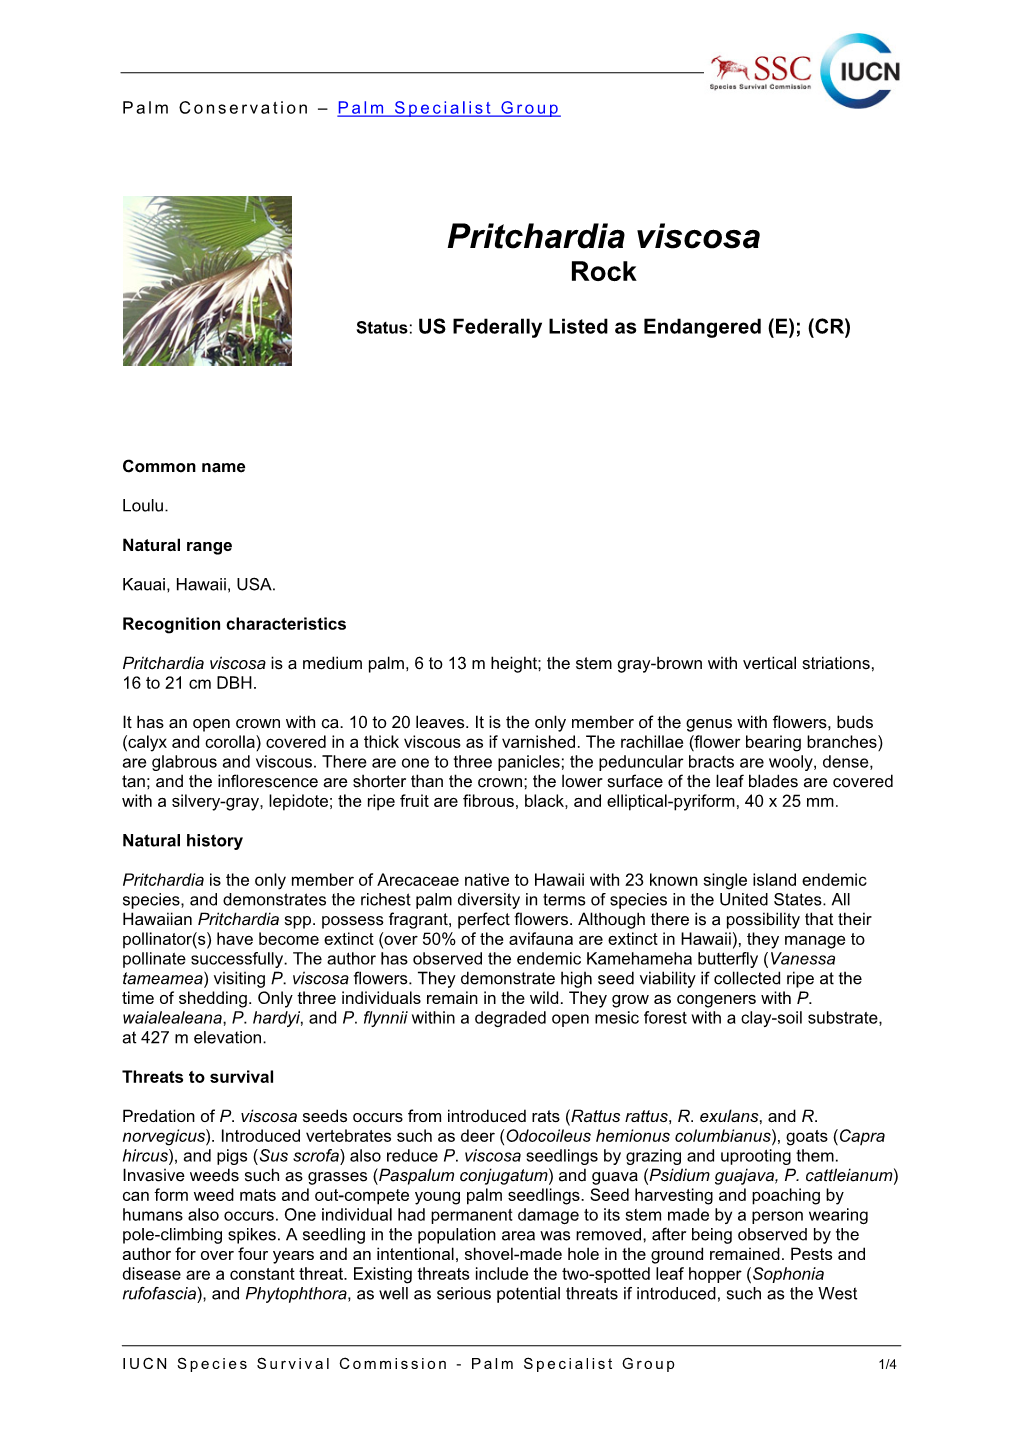 Pritchardia Viscosa Conservation Fact Sheet